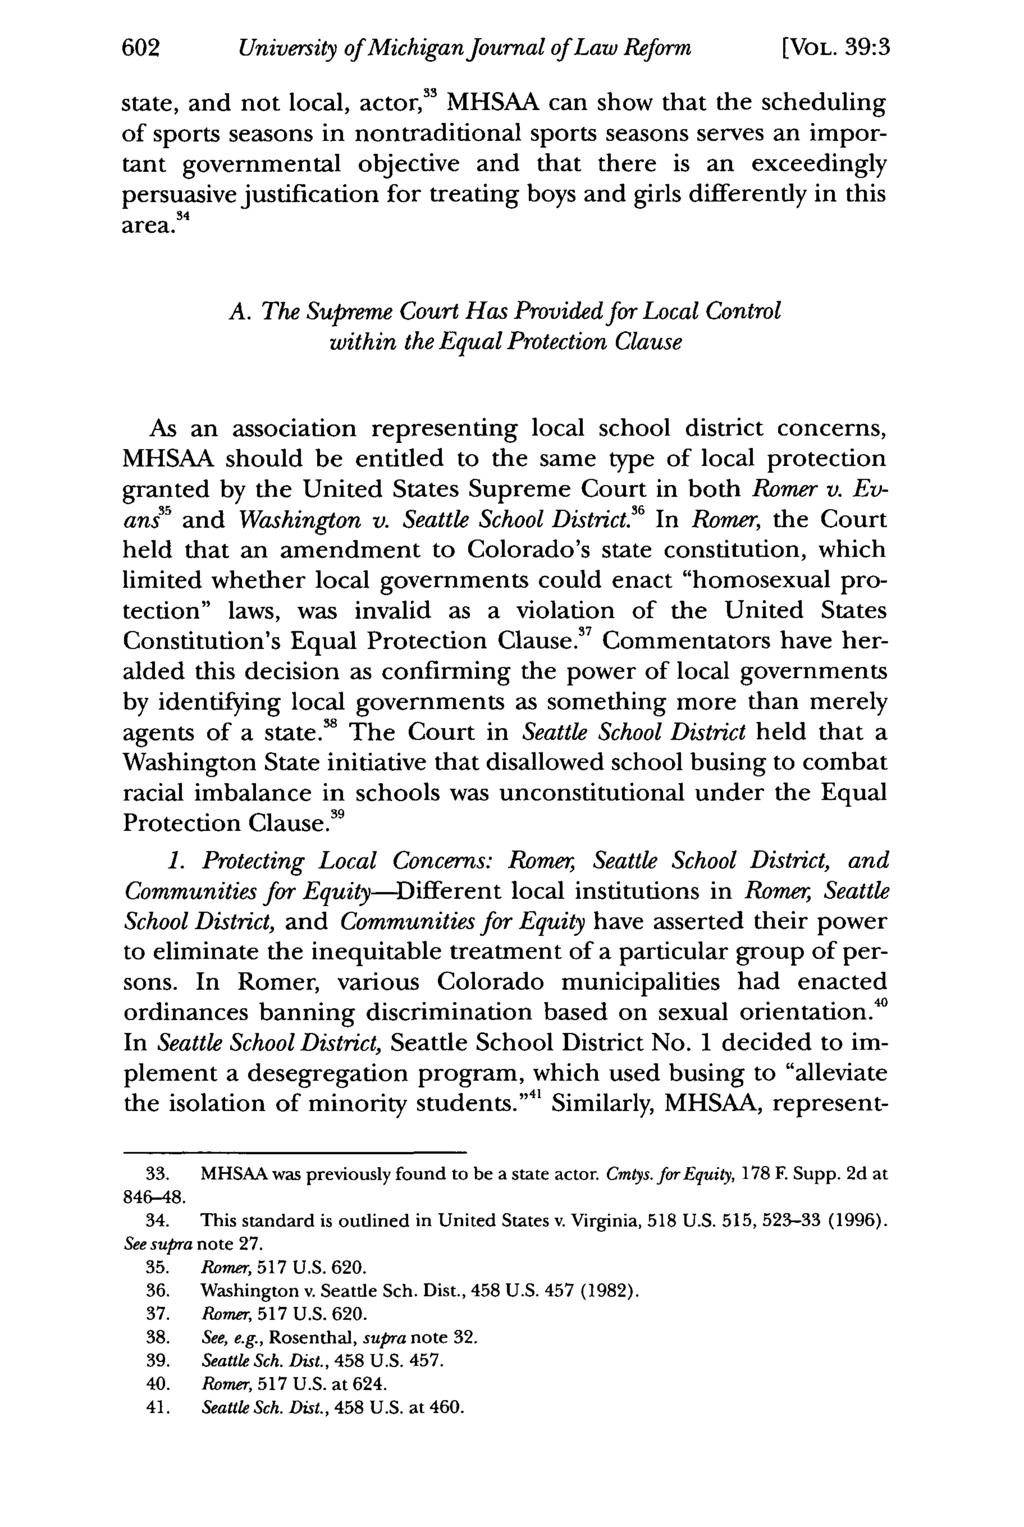 University of Michigan Journal of Law Reform [VOL.